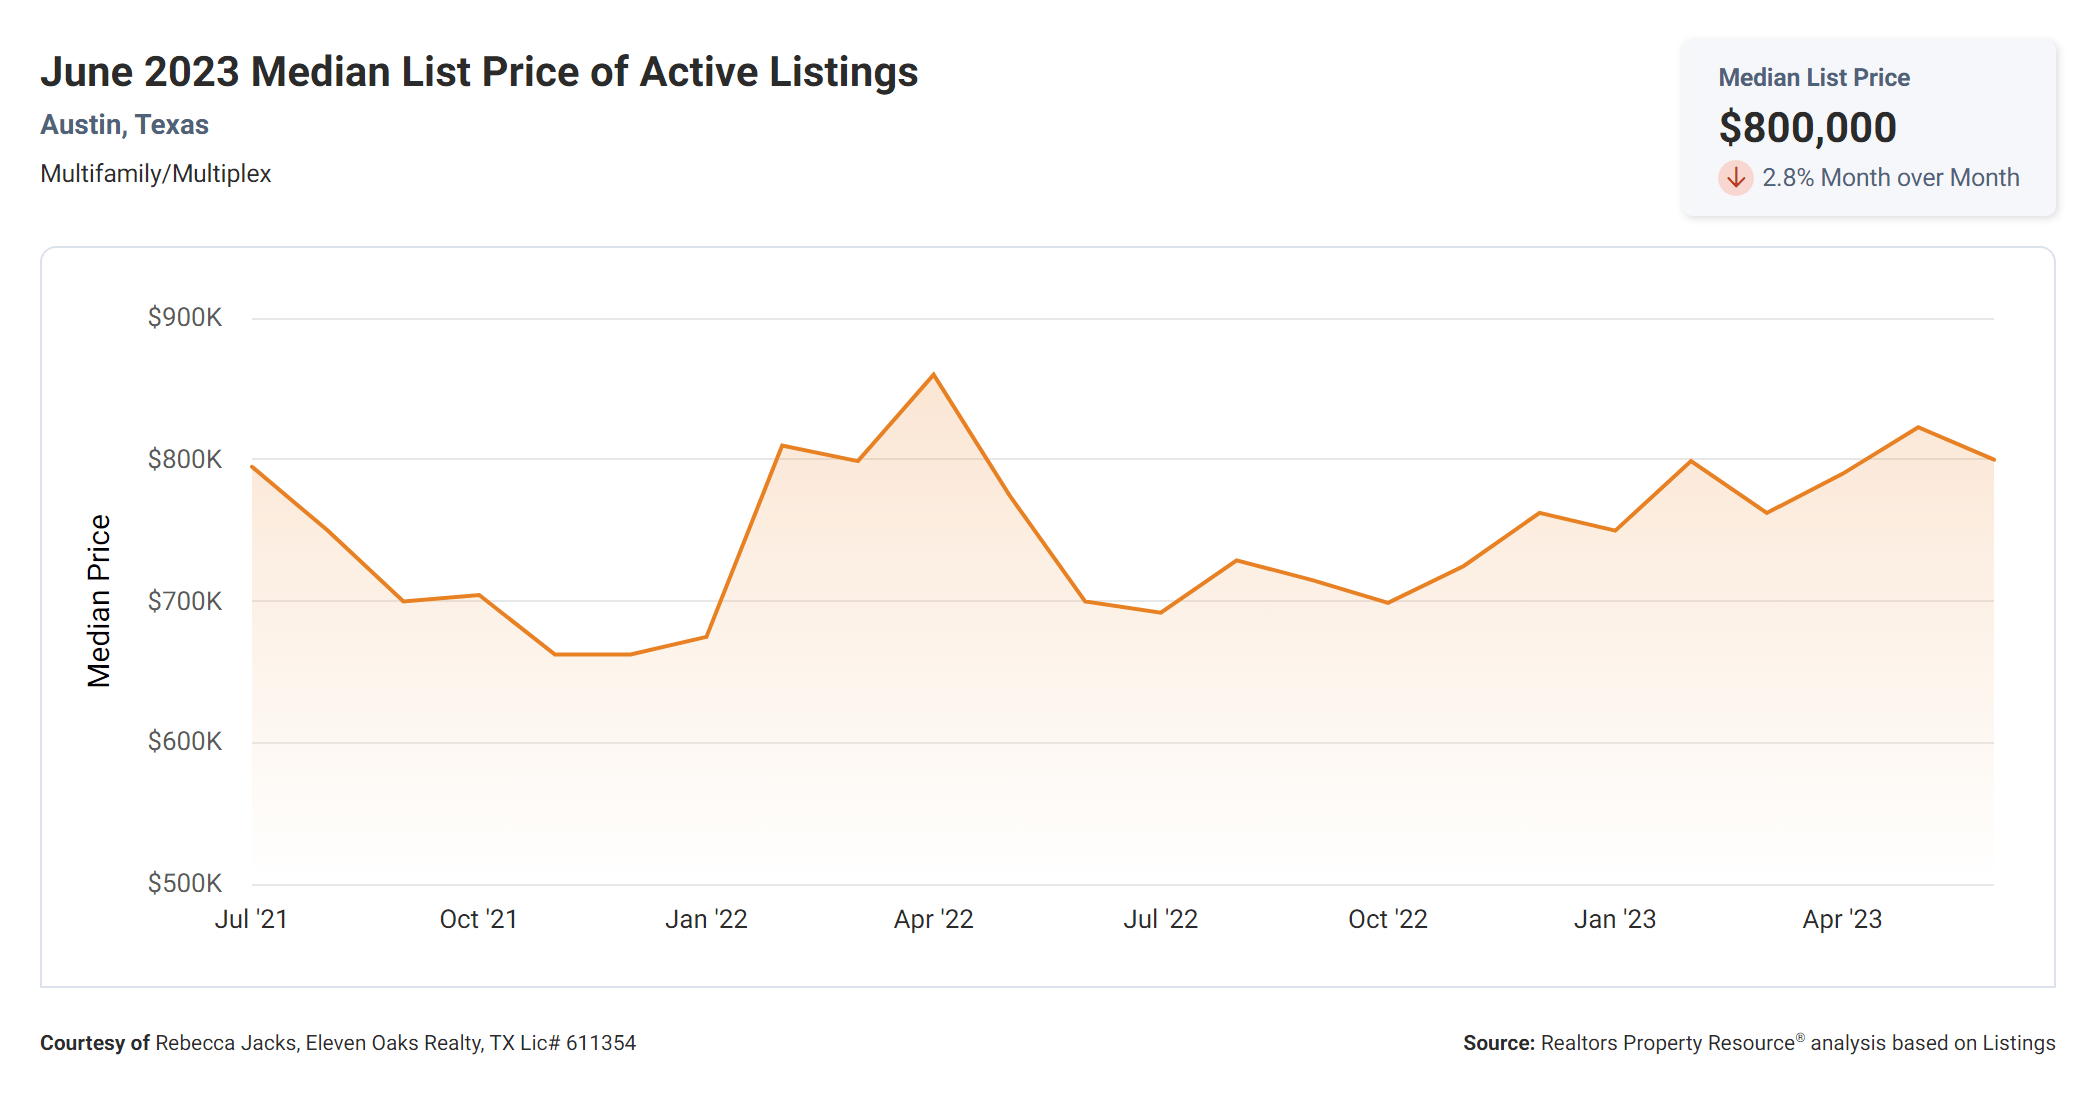 June 2023 median list price of active listings